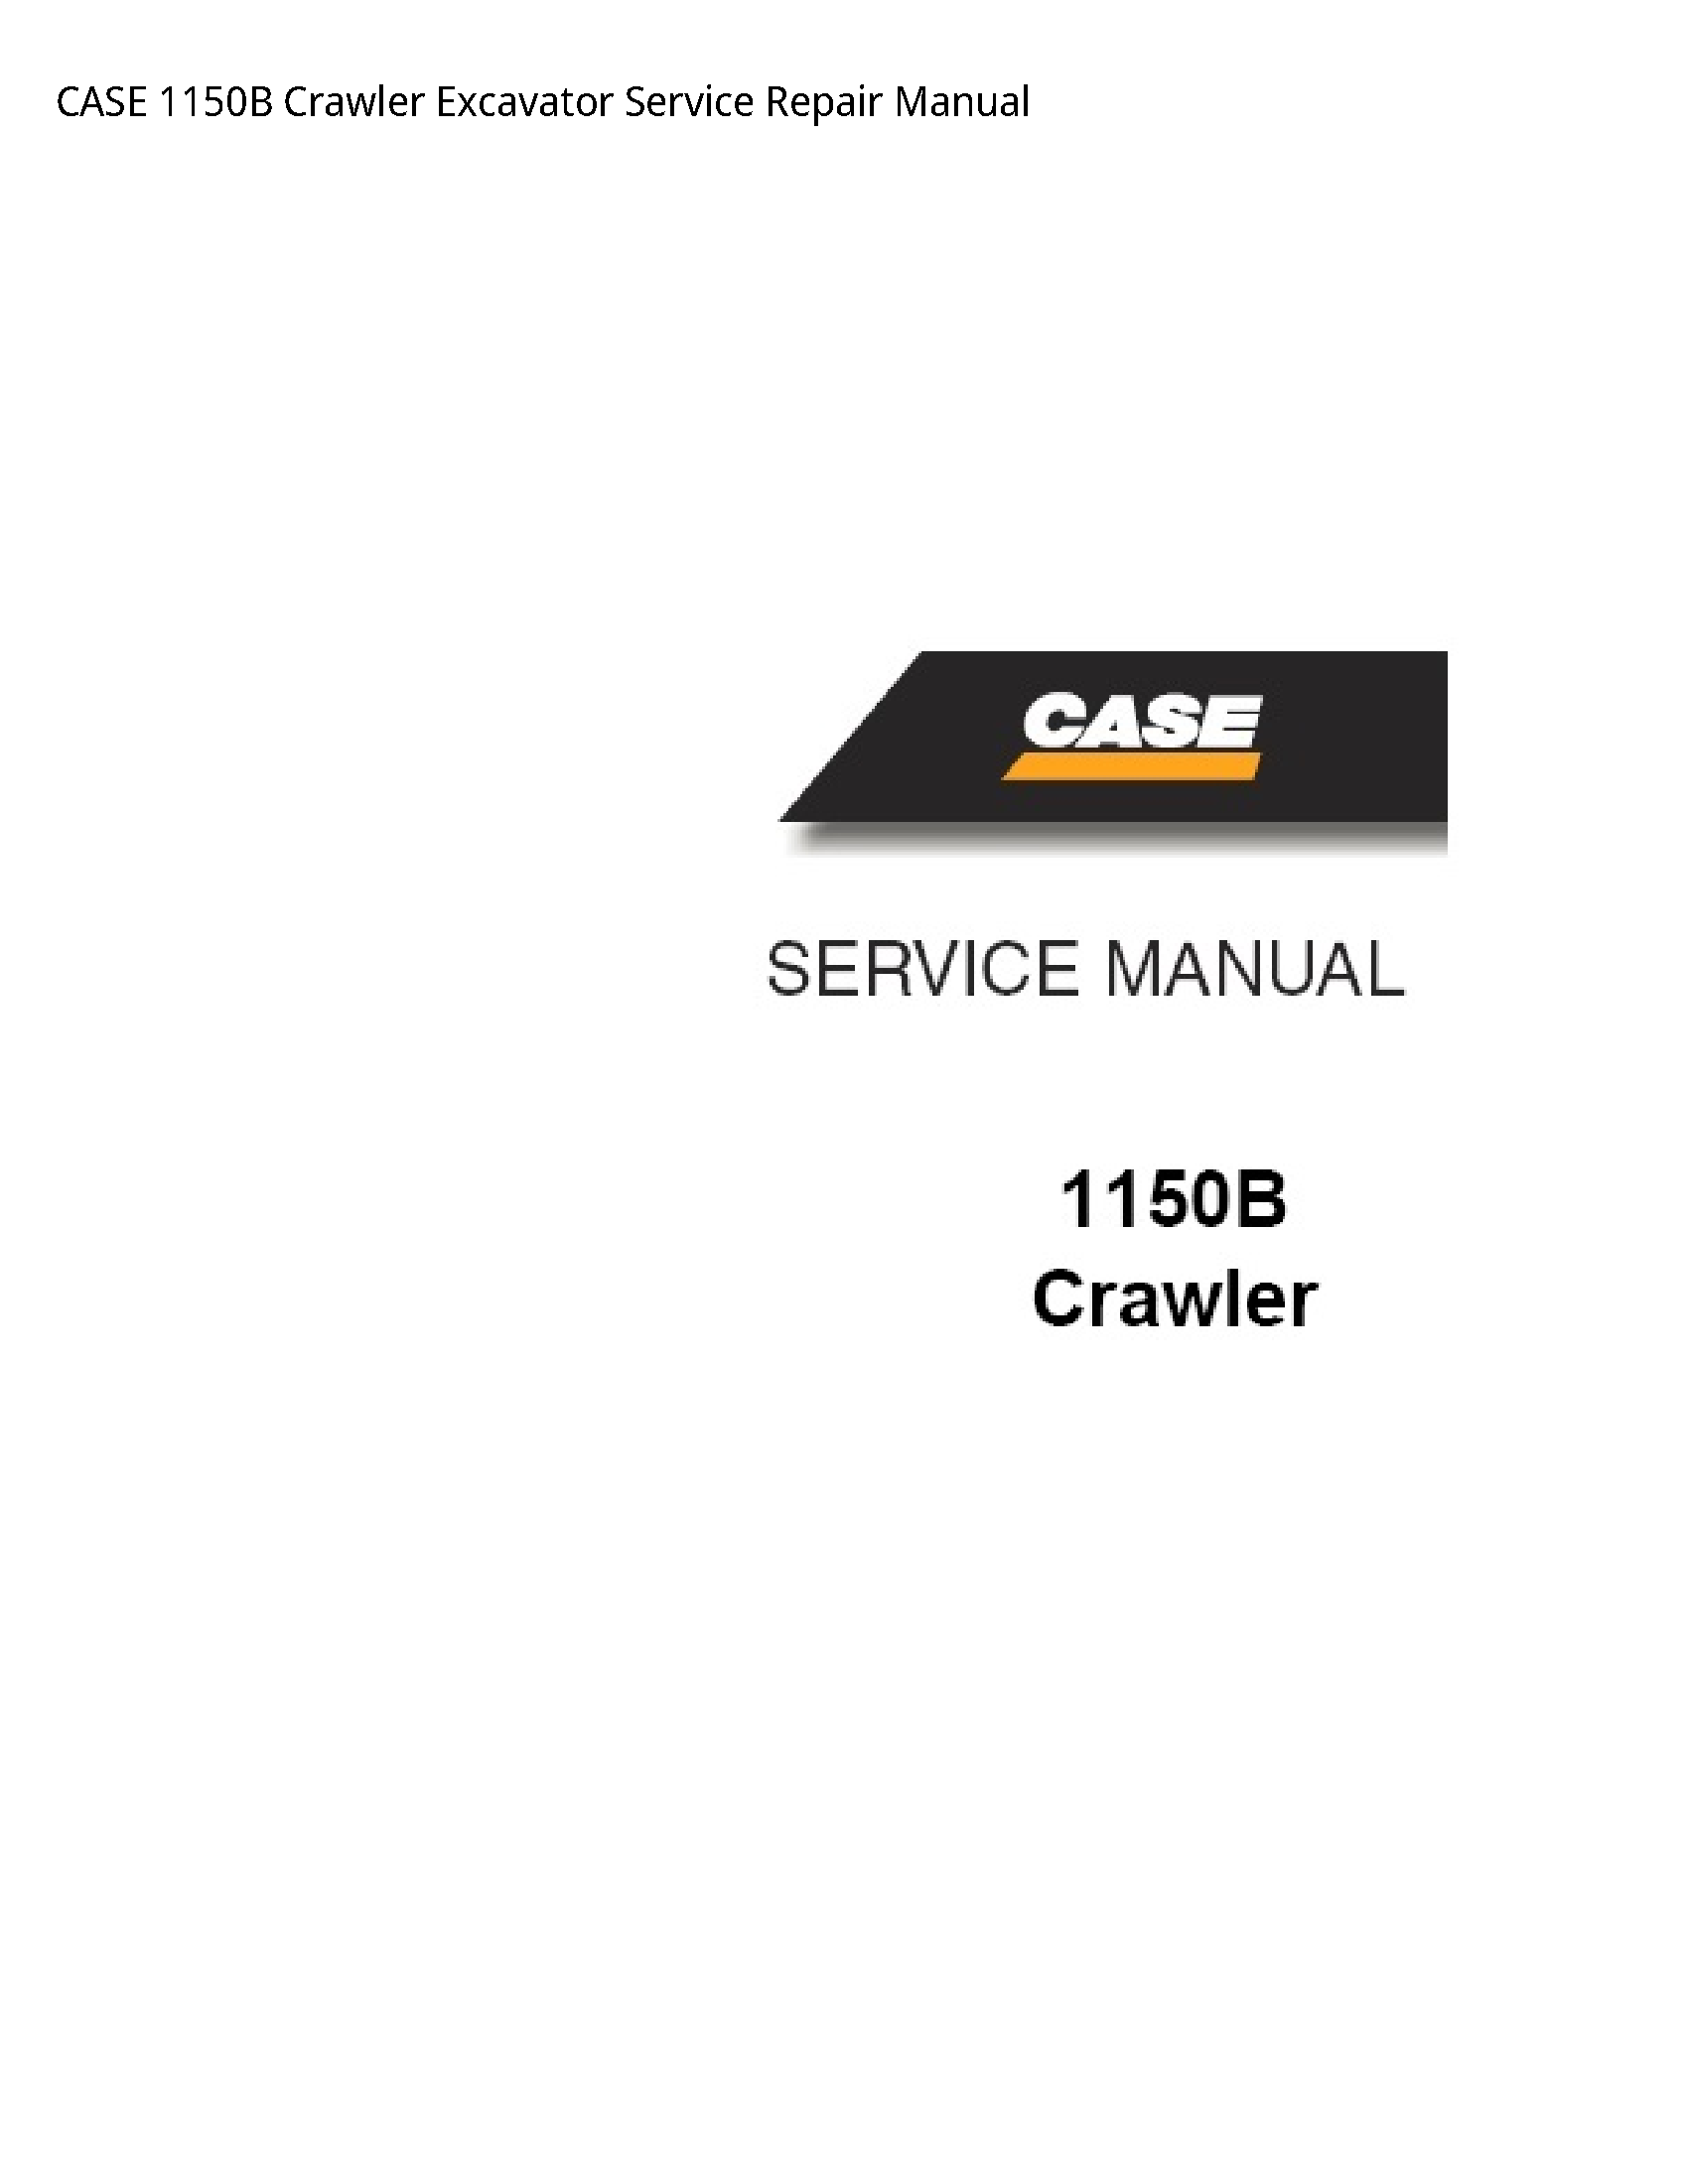 Case/Case IH 1150B Crawler Excavator manual